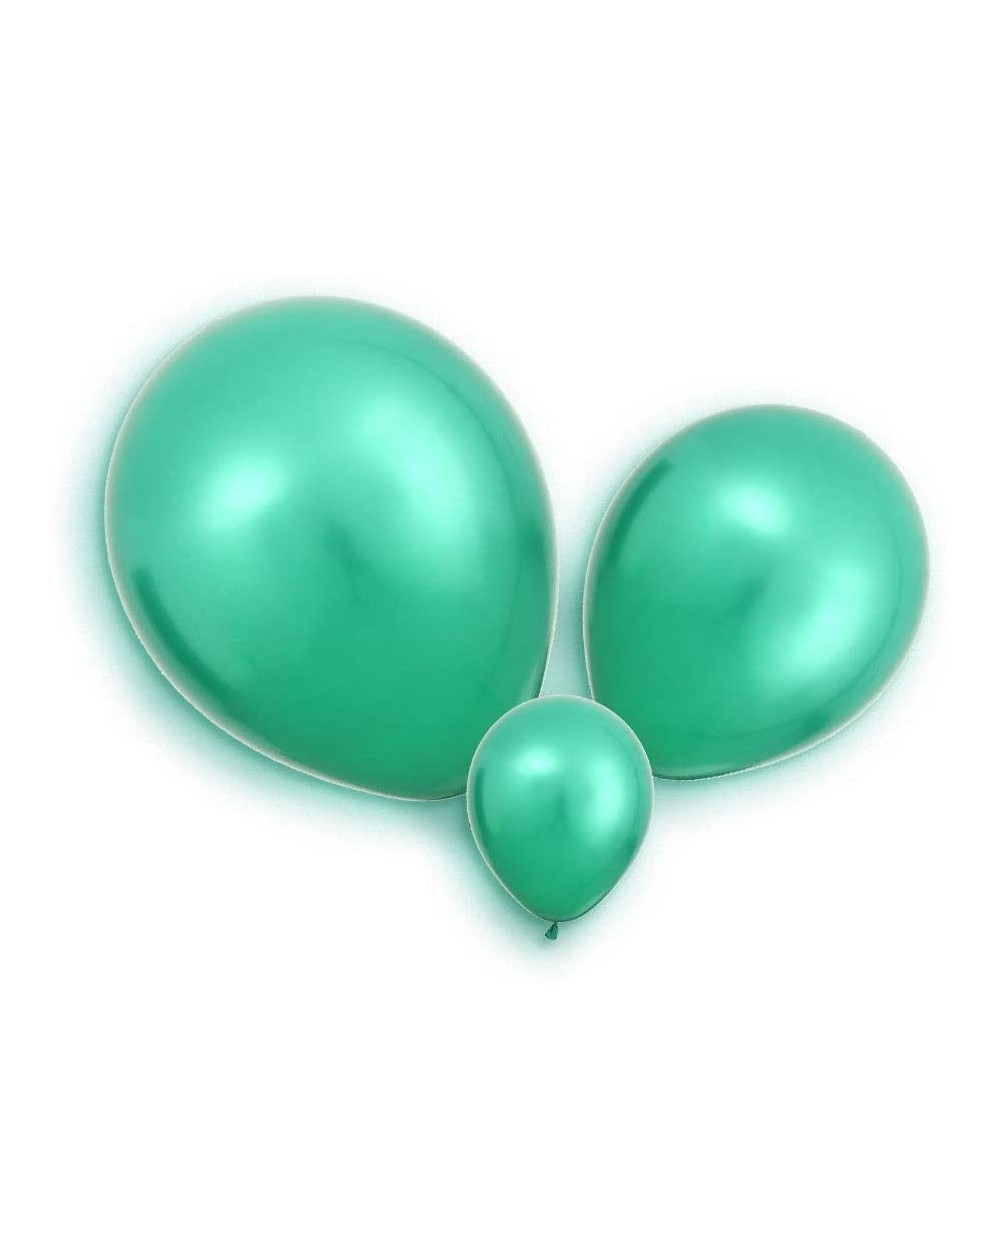 Balloons 150pcs 12/10/5 Inch Metallic Chrome Balloon in Green for Wedding Birthday Party Decoration (Green 150) - Green 150 -...